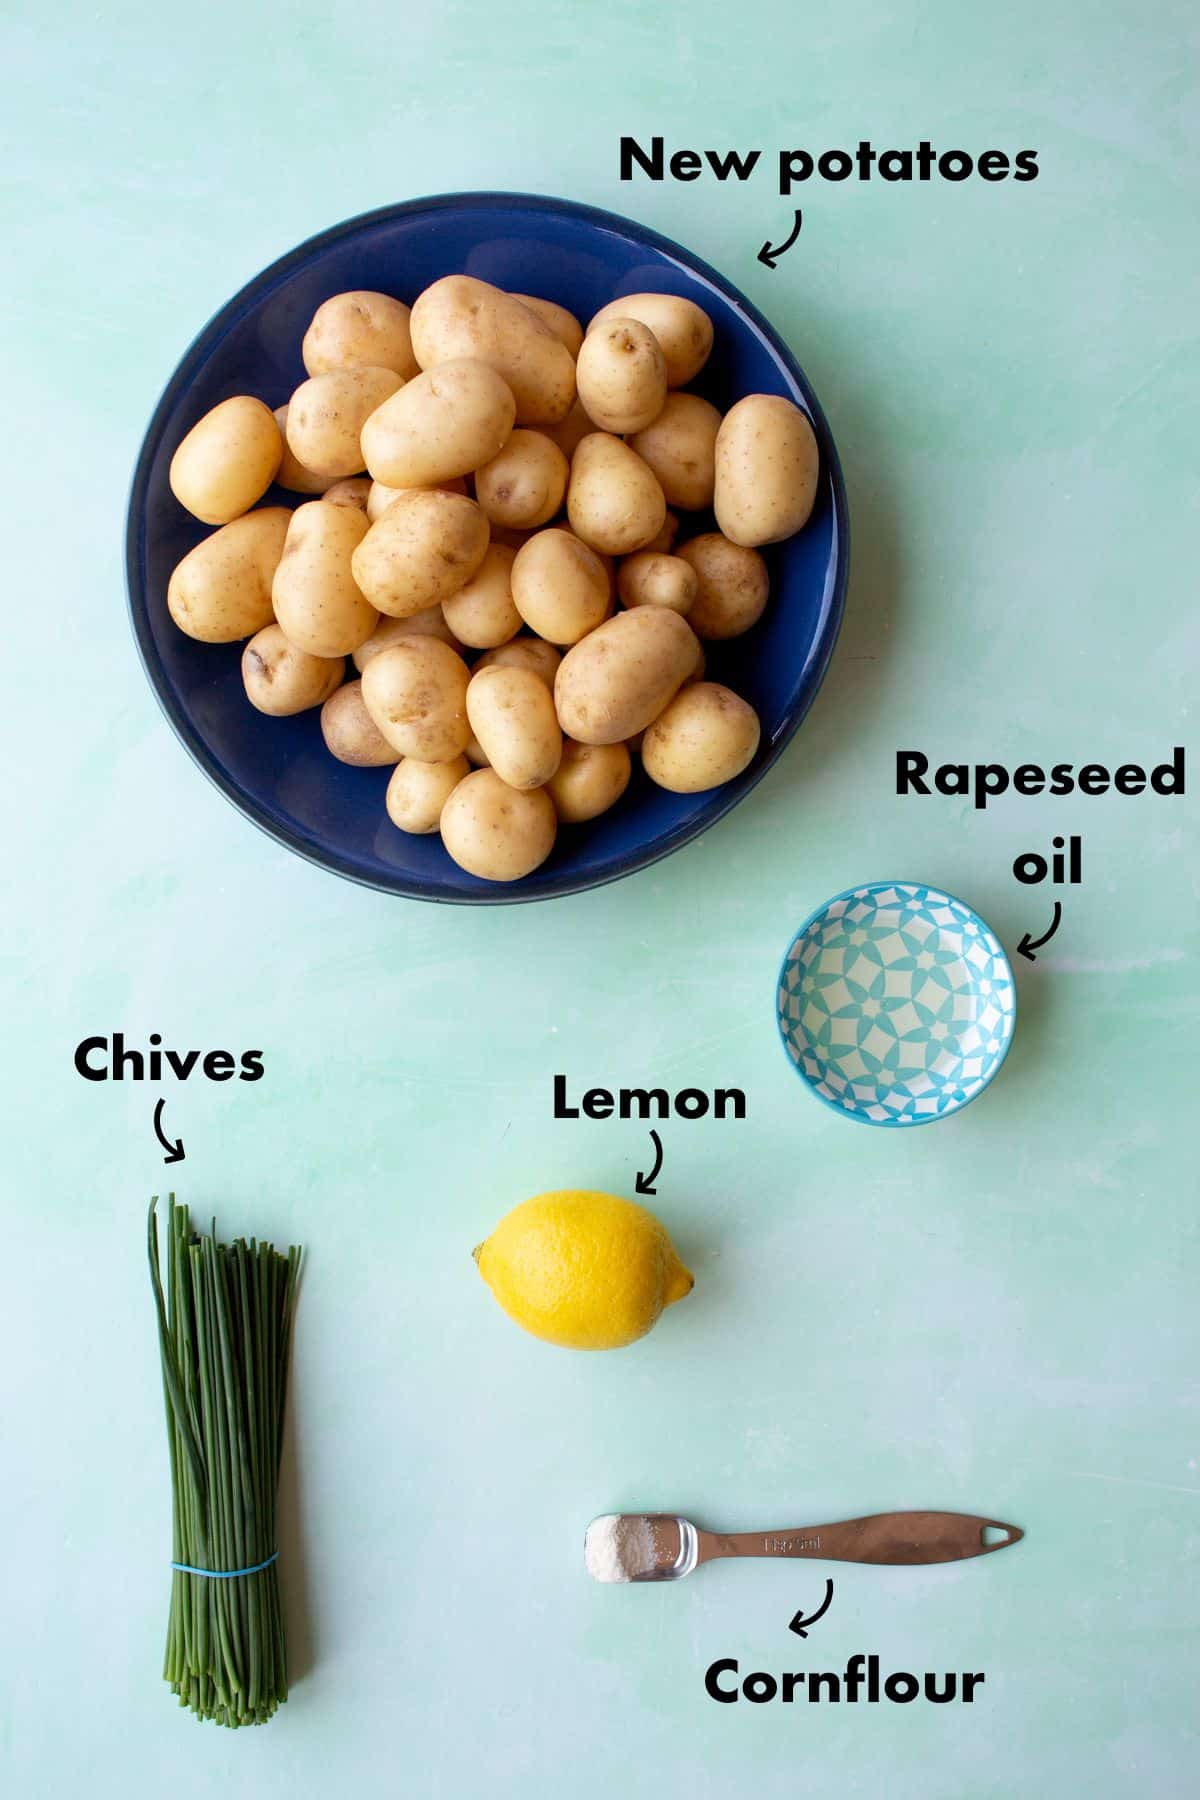 Ingredients photo for Air fryer potato recipe